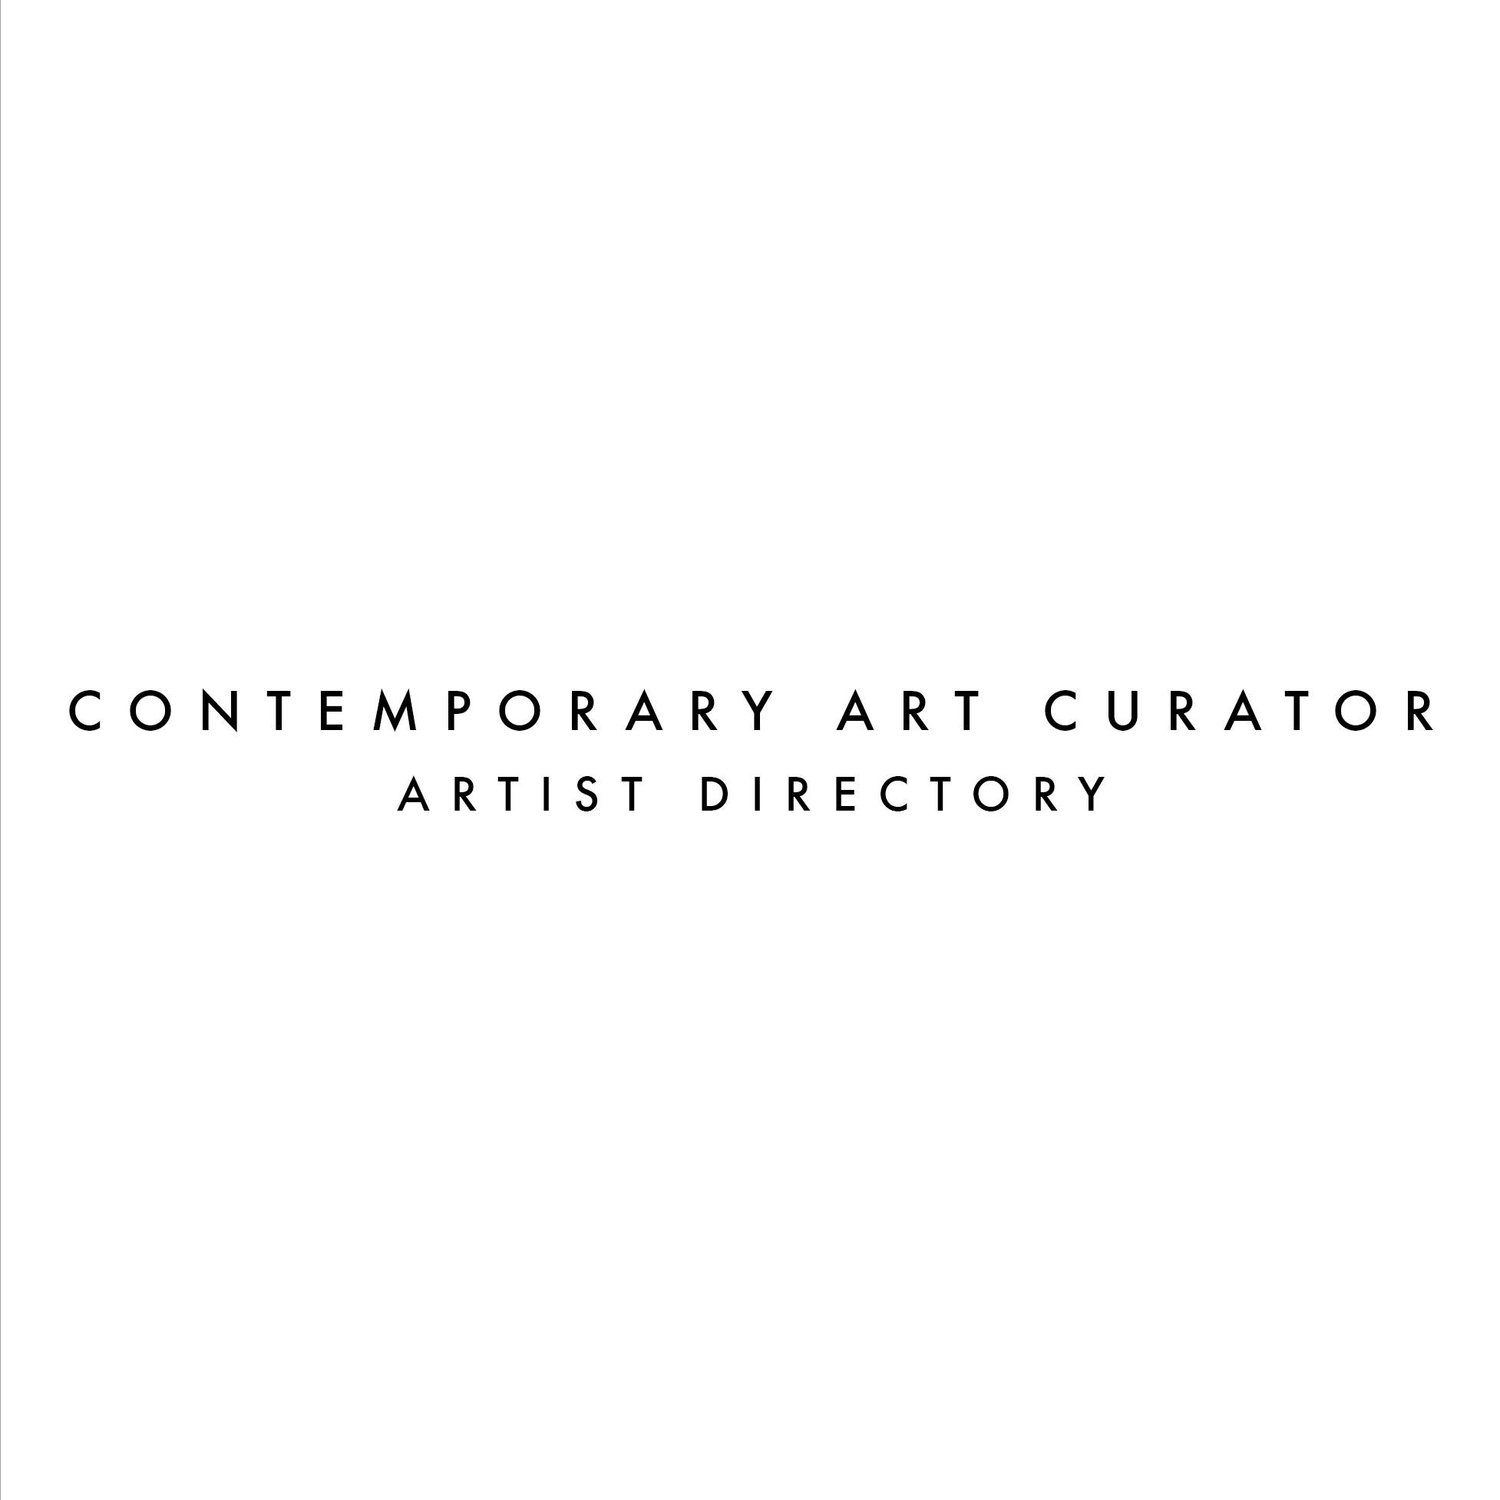 (c) Contemporaryartcurator.com